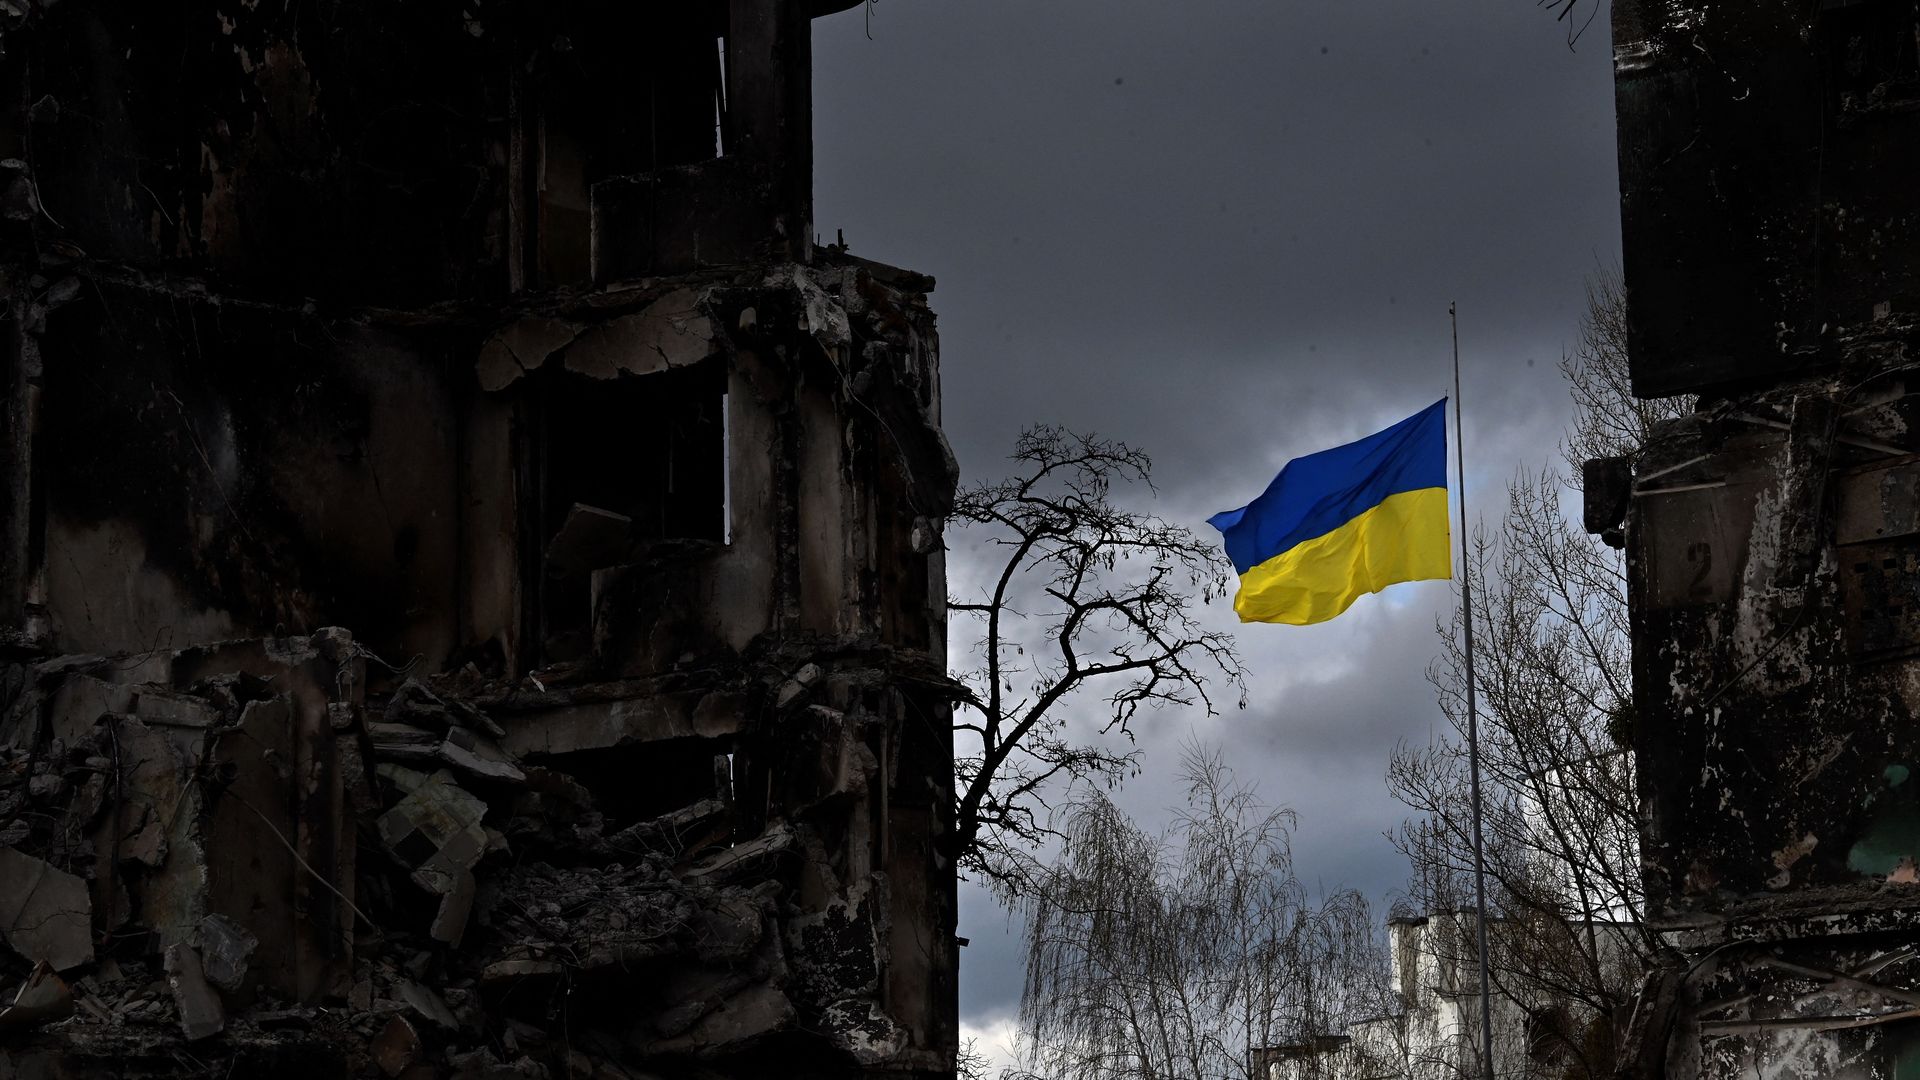 A Ukrainian flag amid rubble.